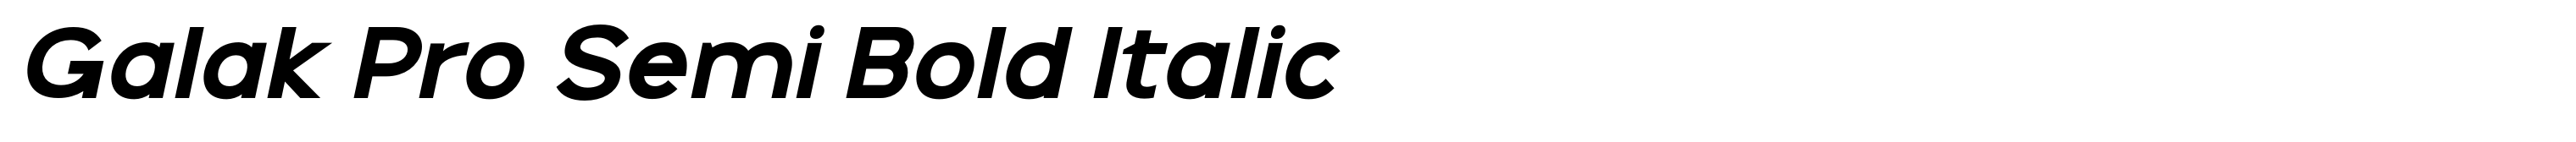 Galak Pro Semi Bold Italic